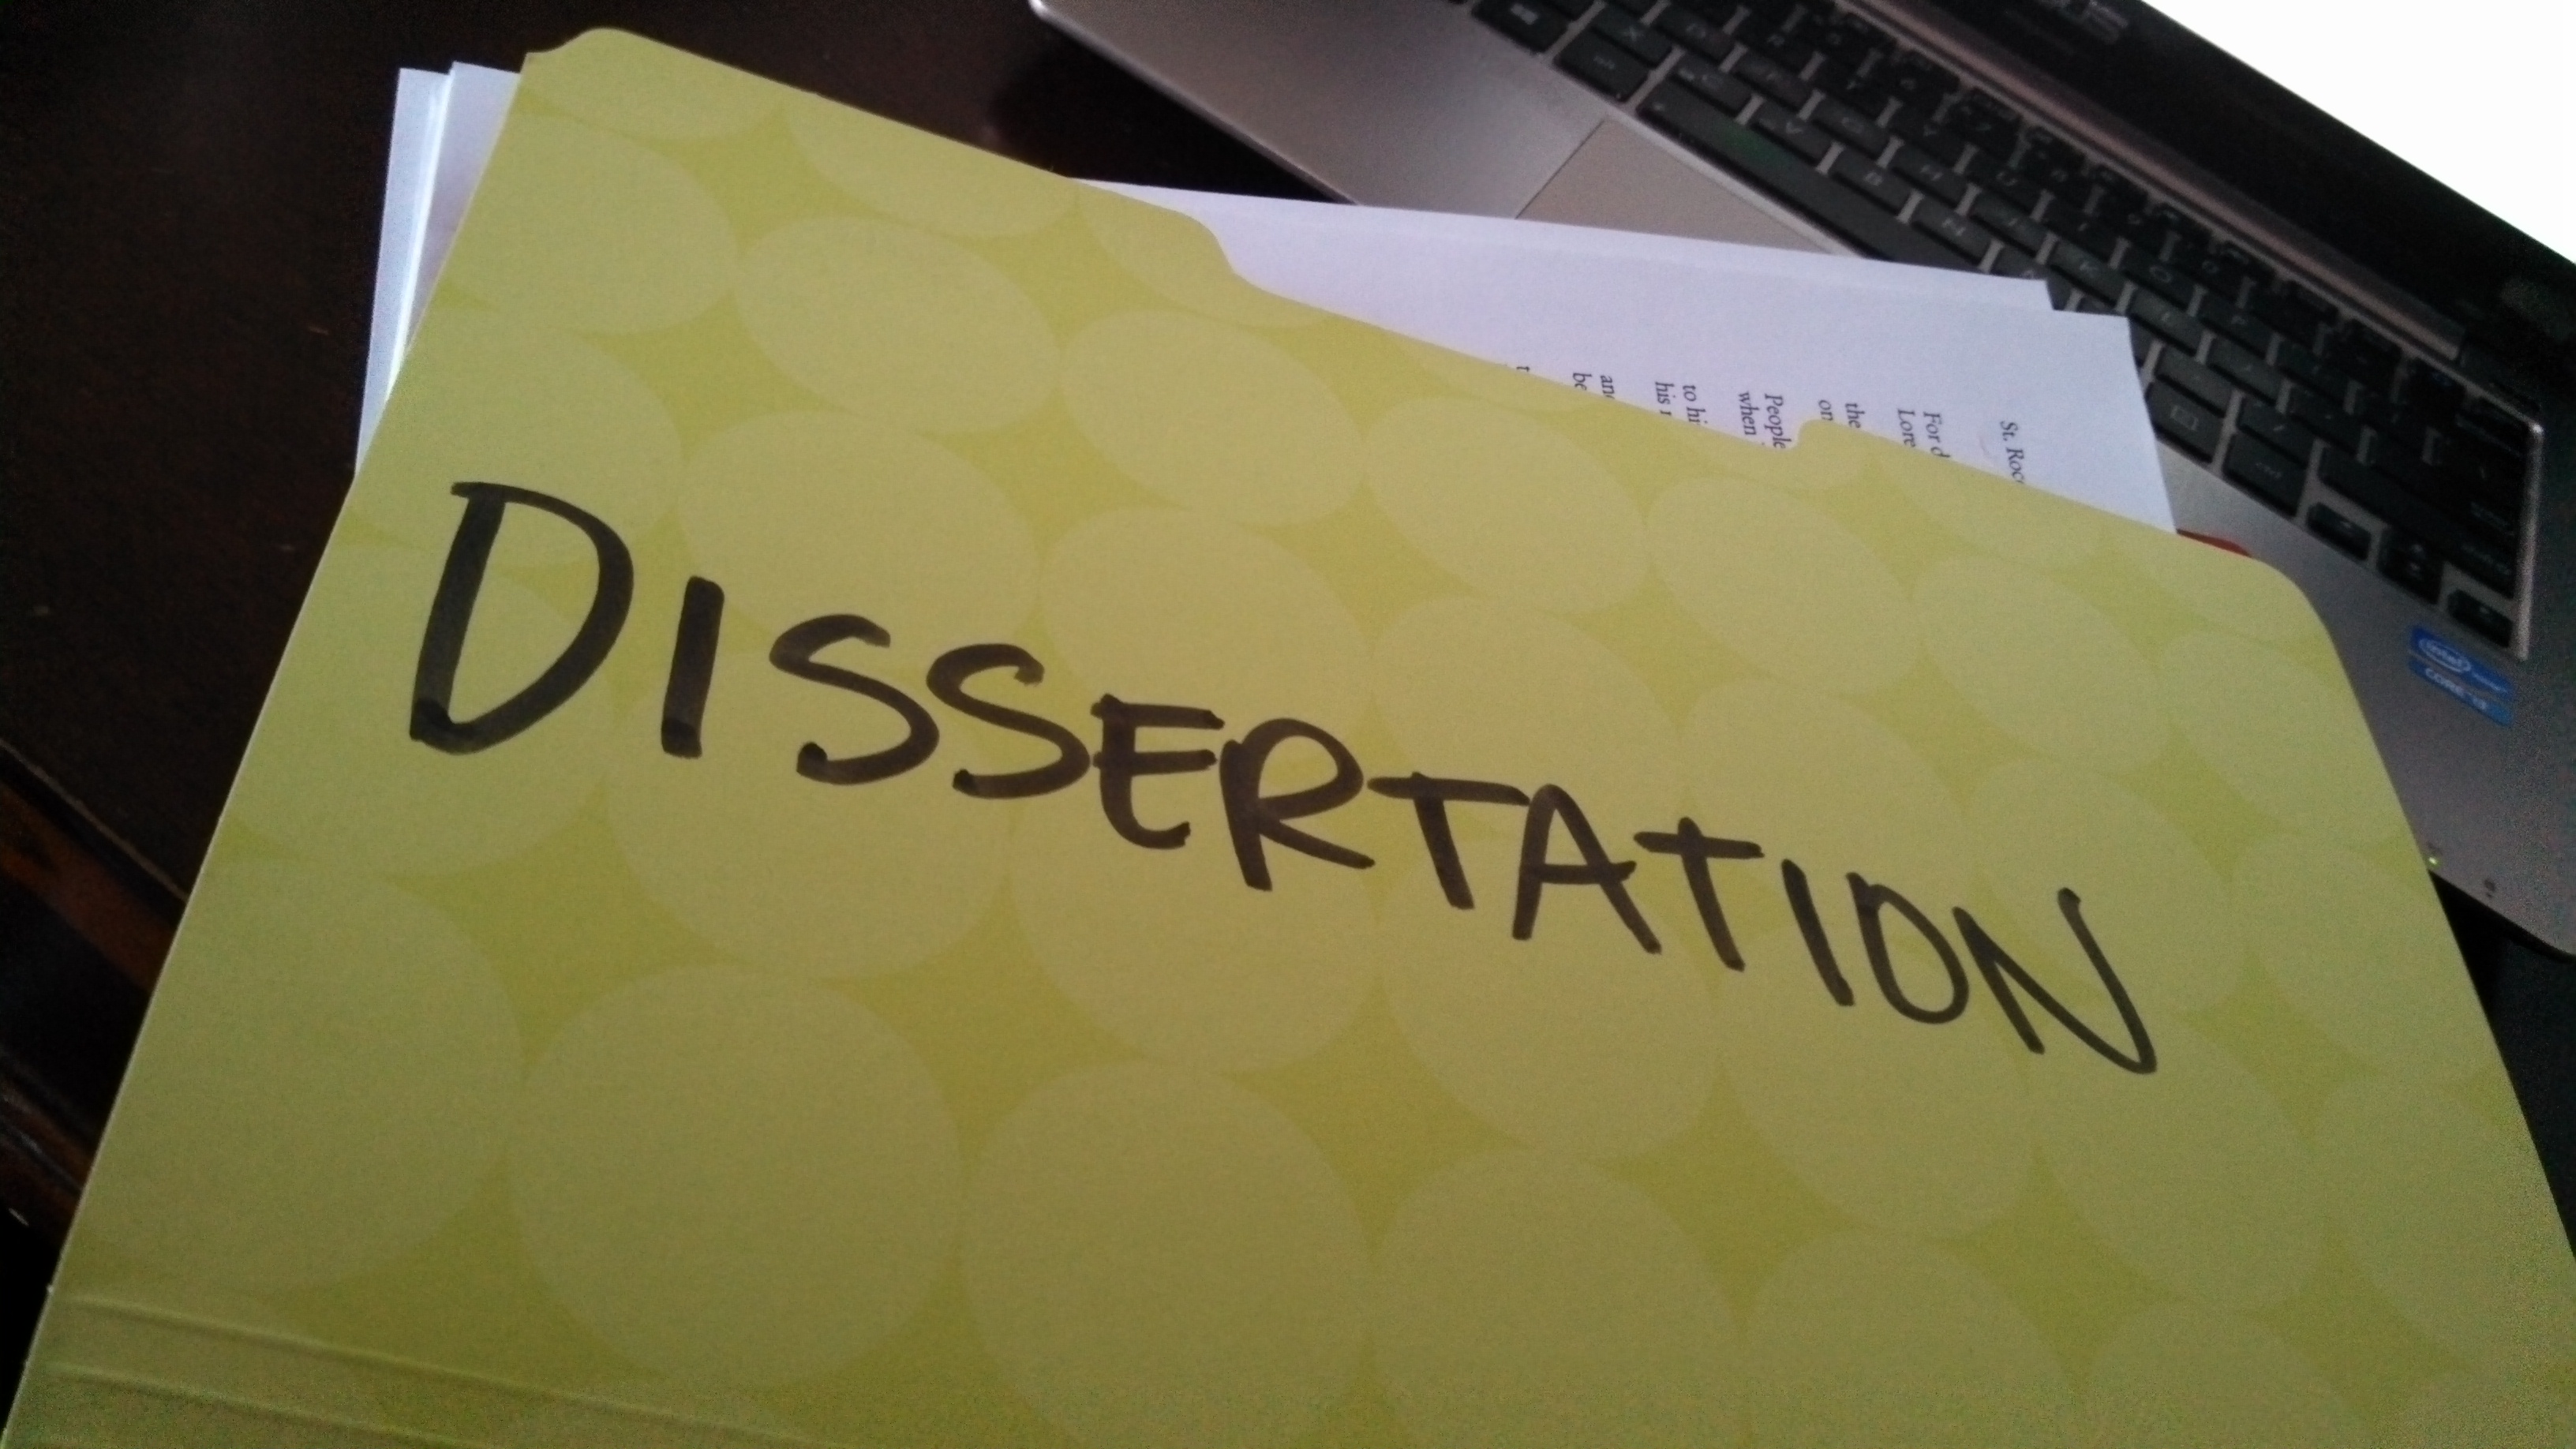 Phd dissertation writing